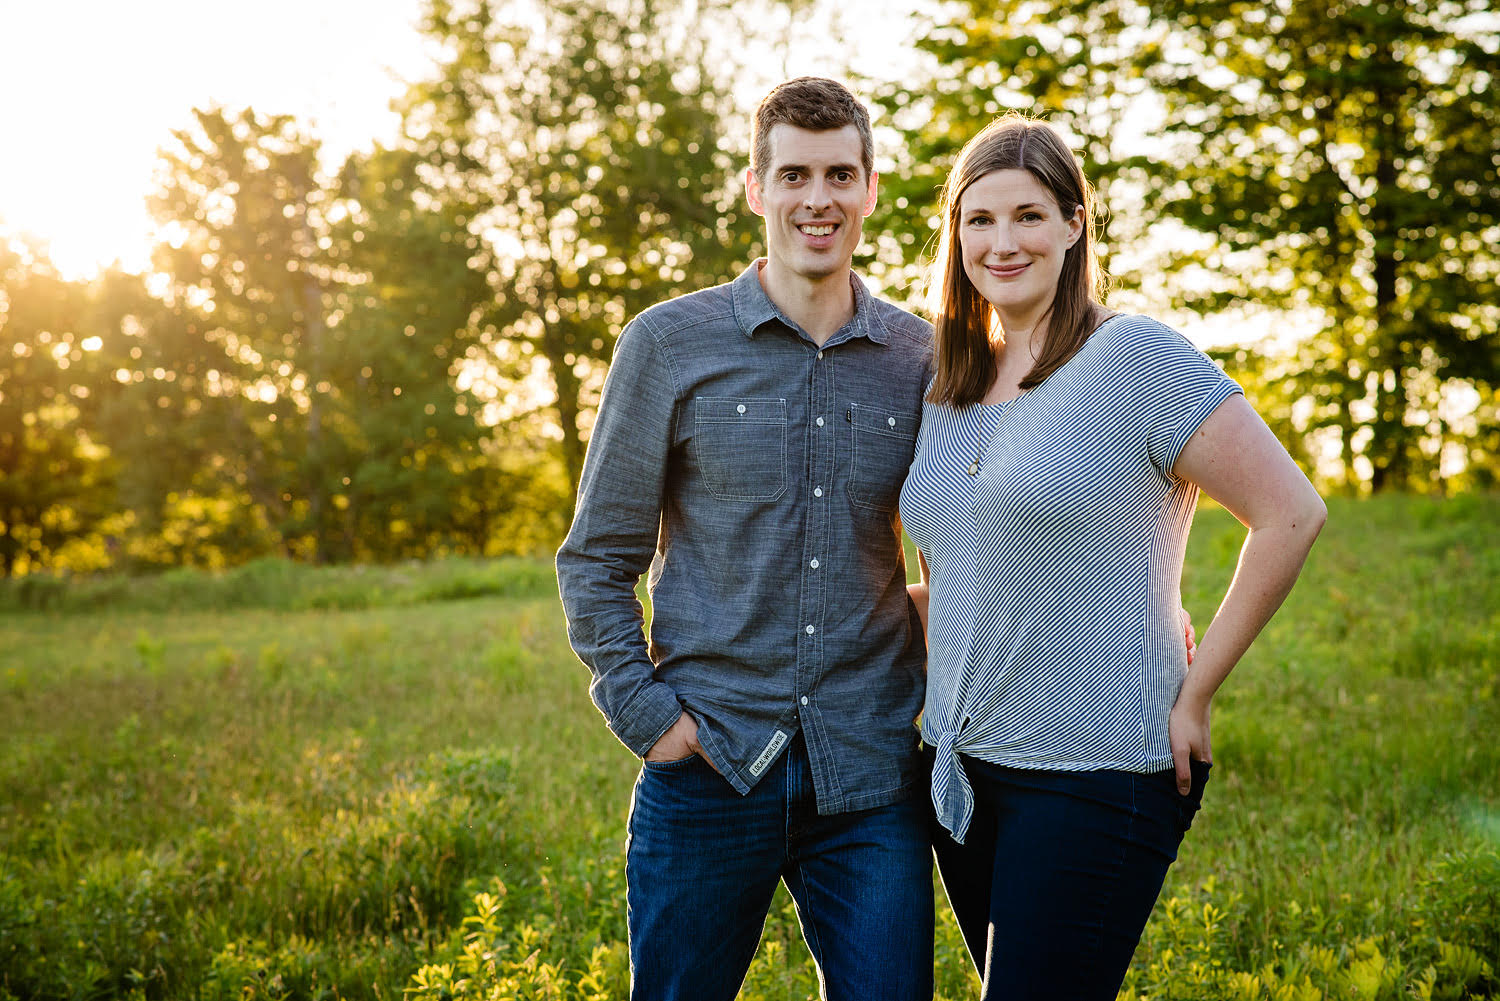 Megan and Jacob Hannah of Hannah Photography, a Vermont based wedding photography company